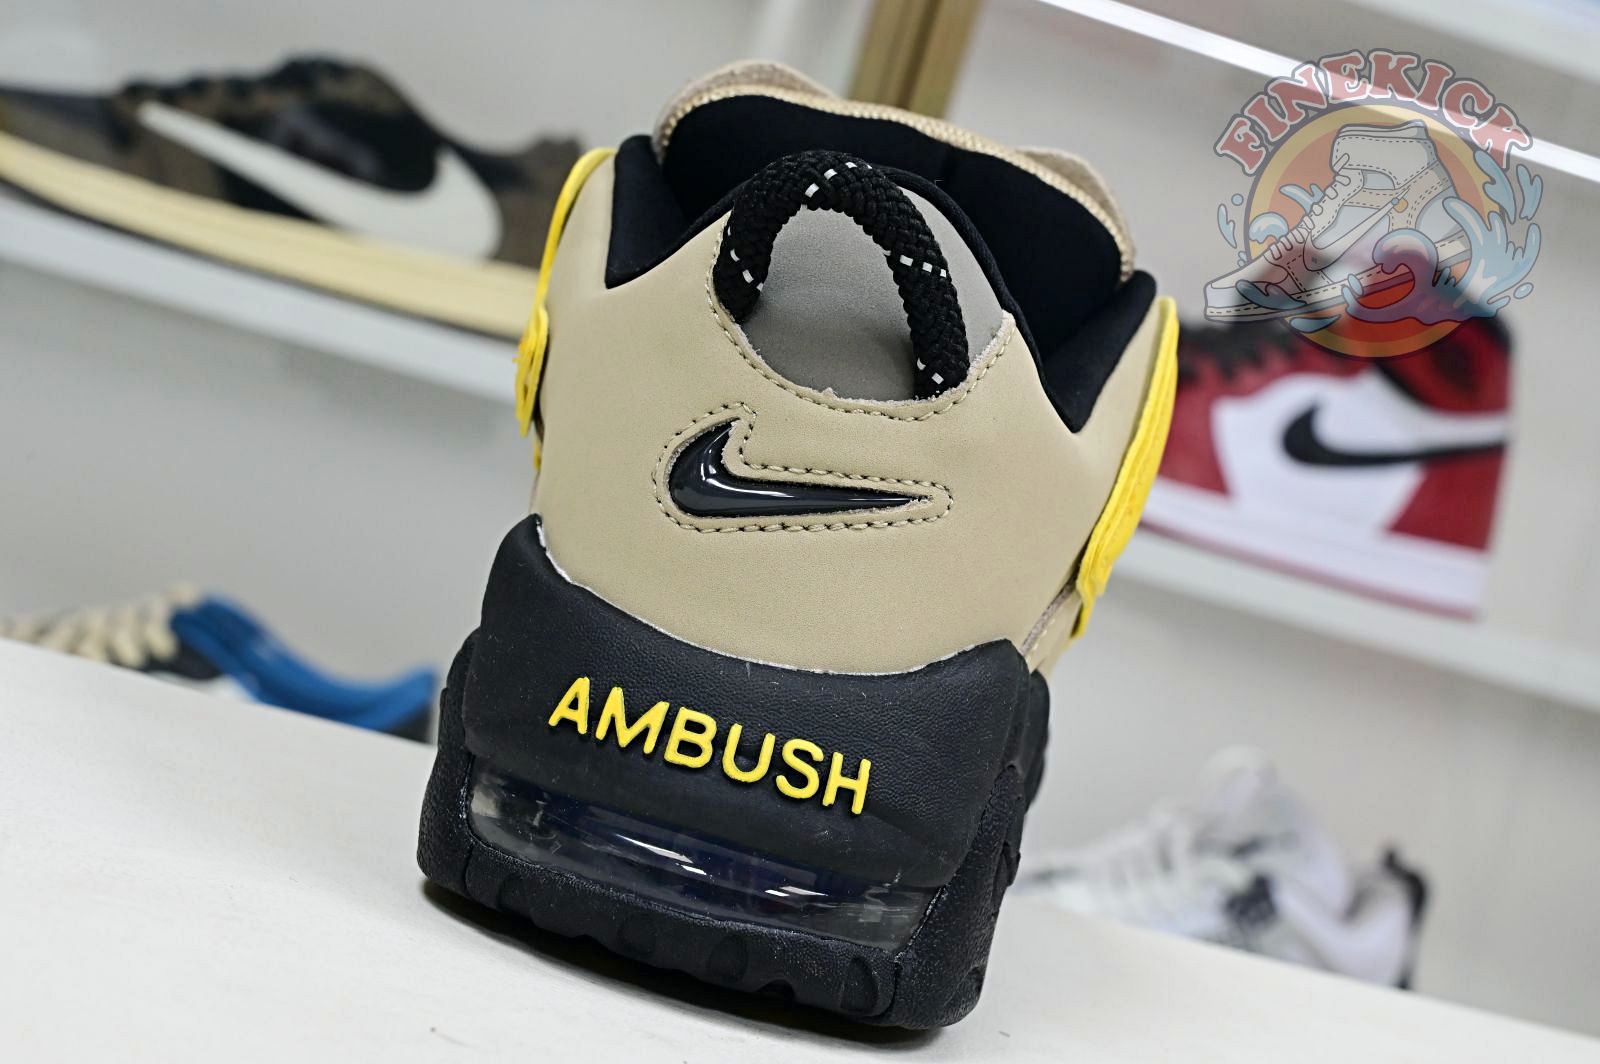 AMBUSH x Nike Air More Uptempo Low"Limestone"